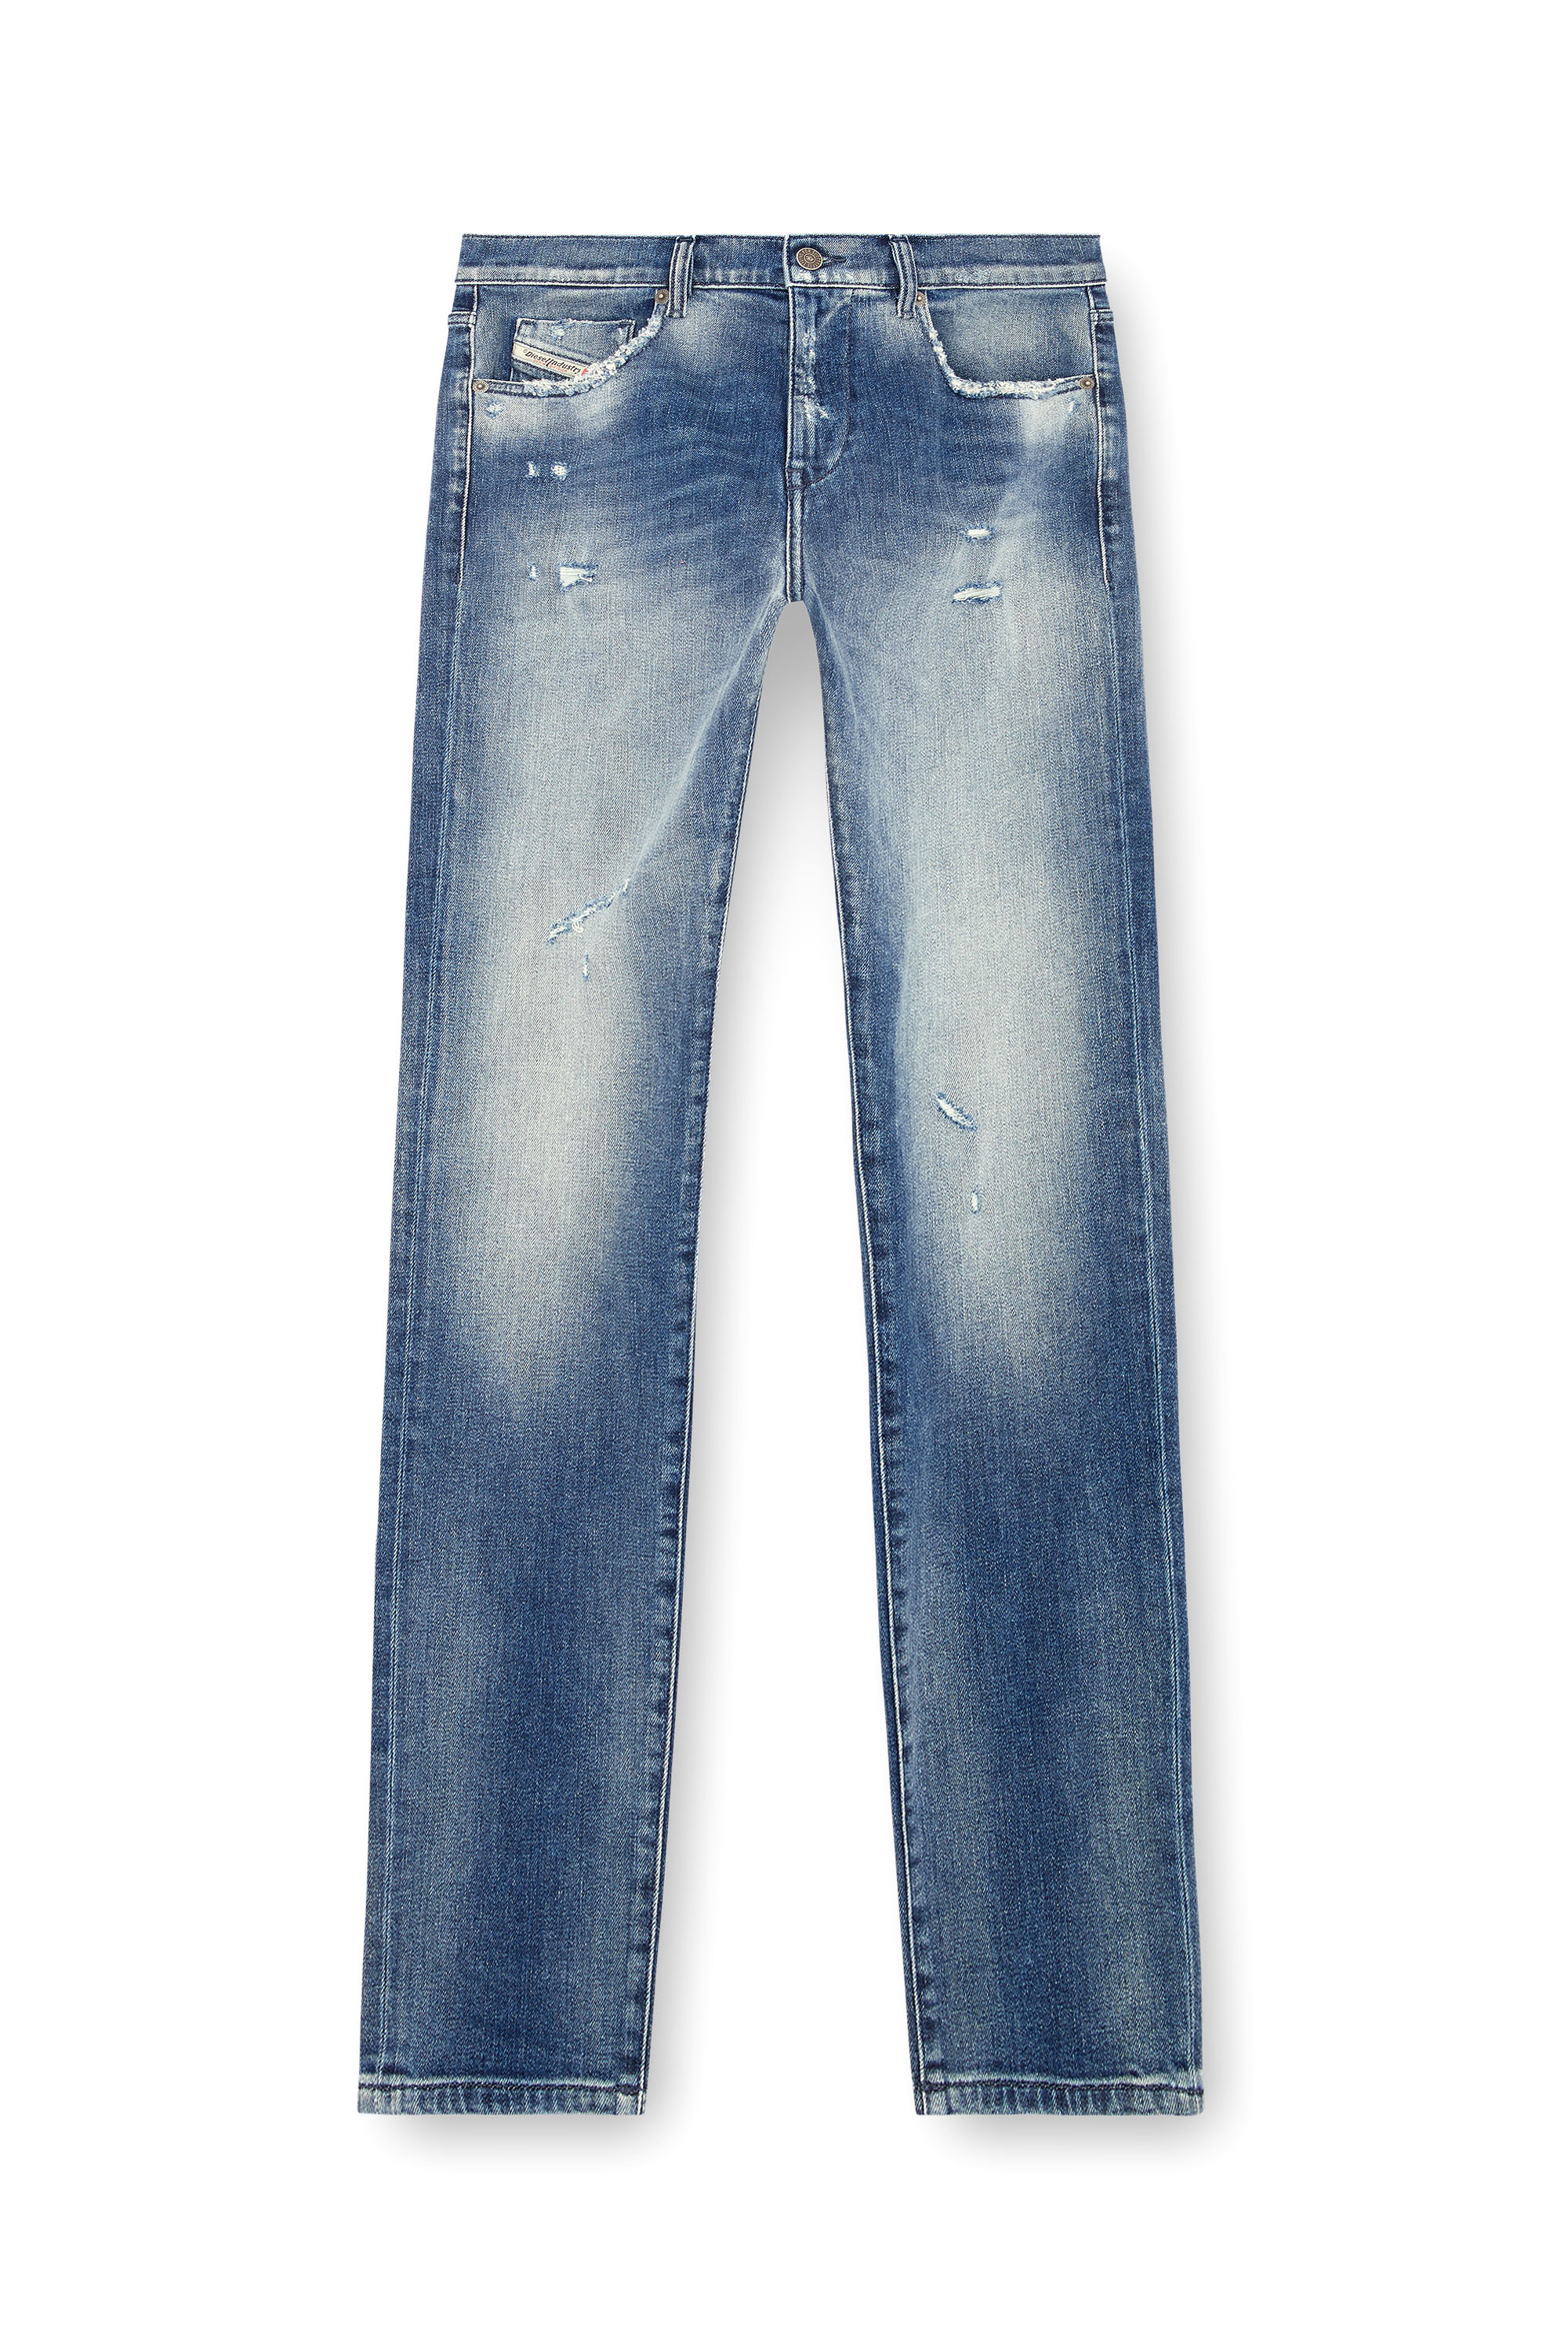 Diesel - Slim Jeans 2019 D-Strukt 09J61, Hombre Slim Jeans - 2019 D-Strukt in Azul marino - Image 5